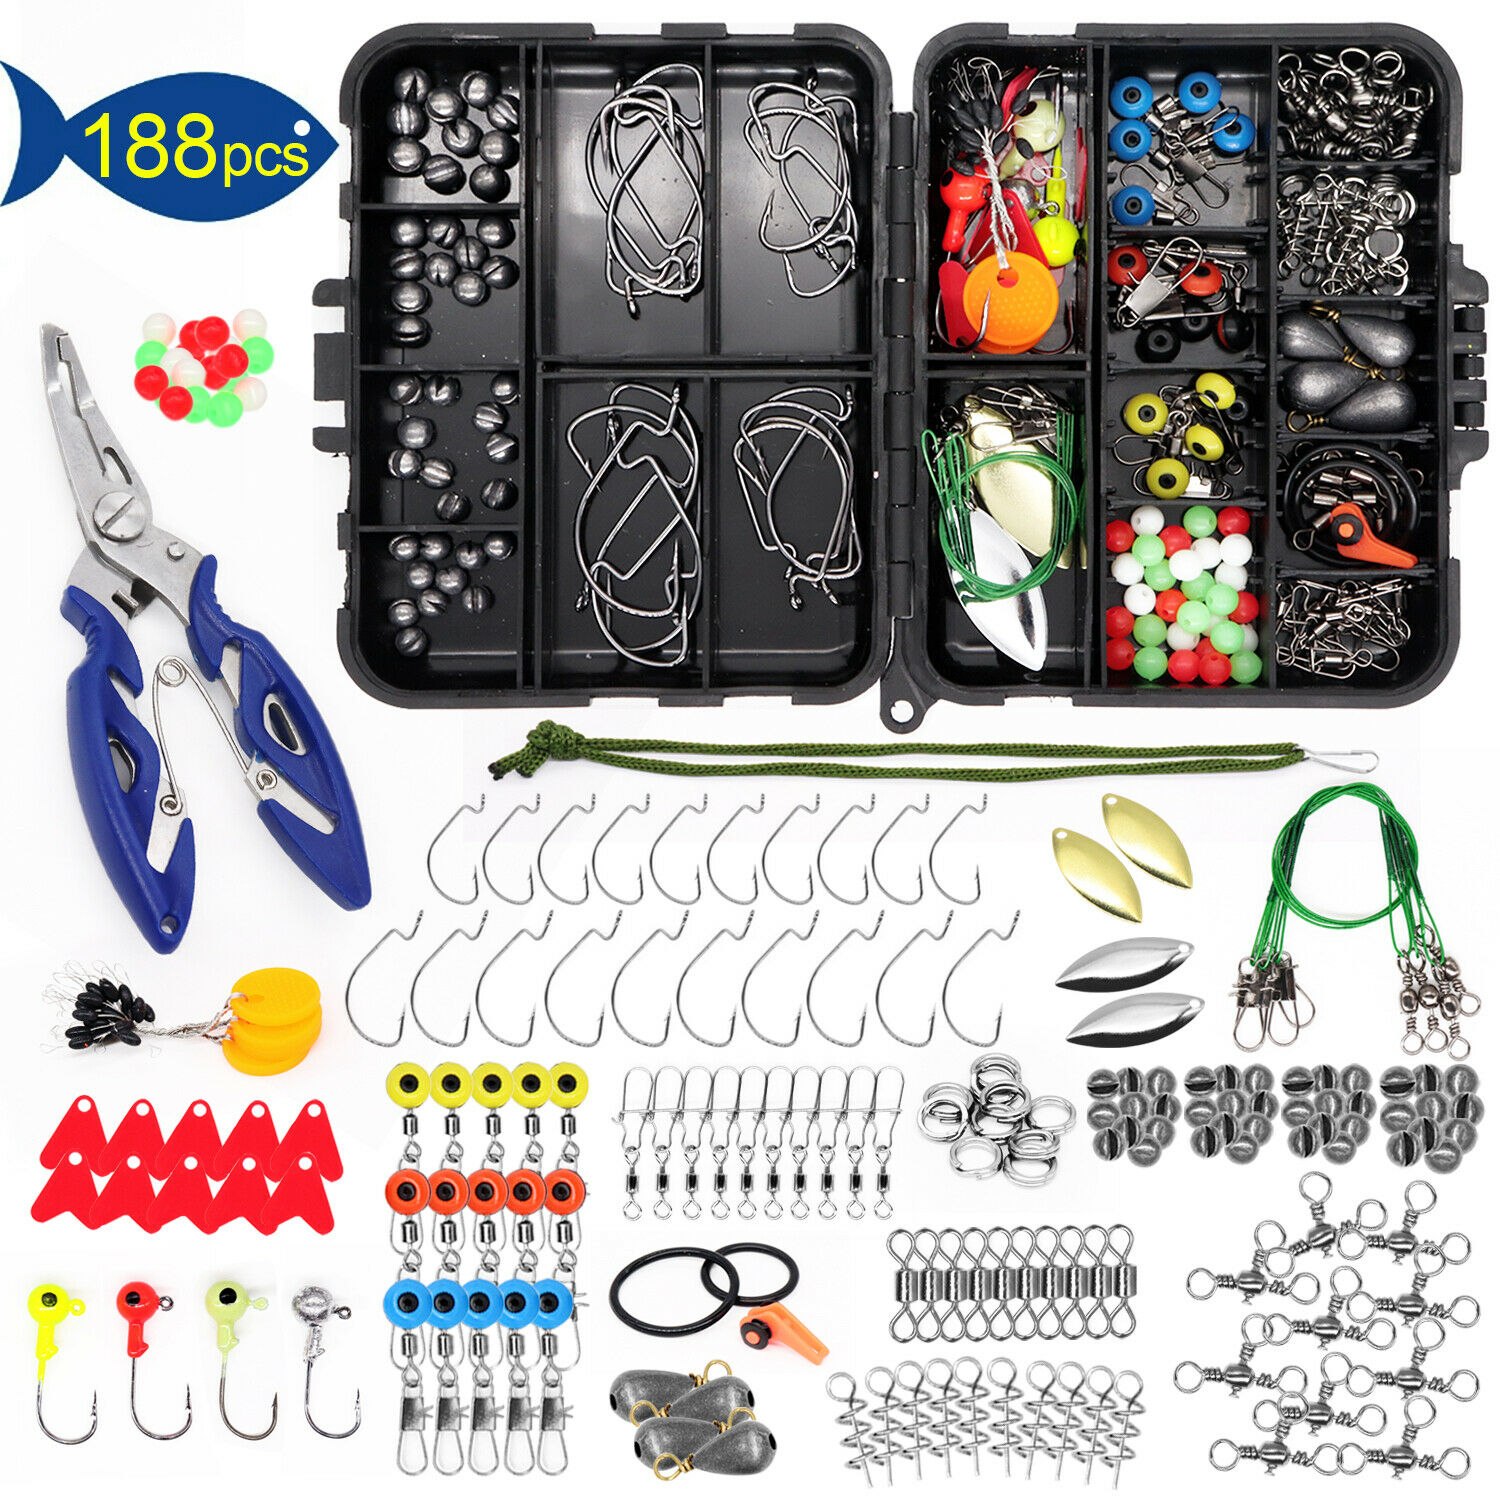 【188pcs】fishing Accessories Kit Set With Tackle Box Pliers Jig Hooks Swivels